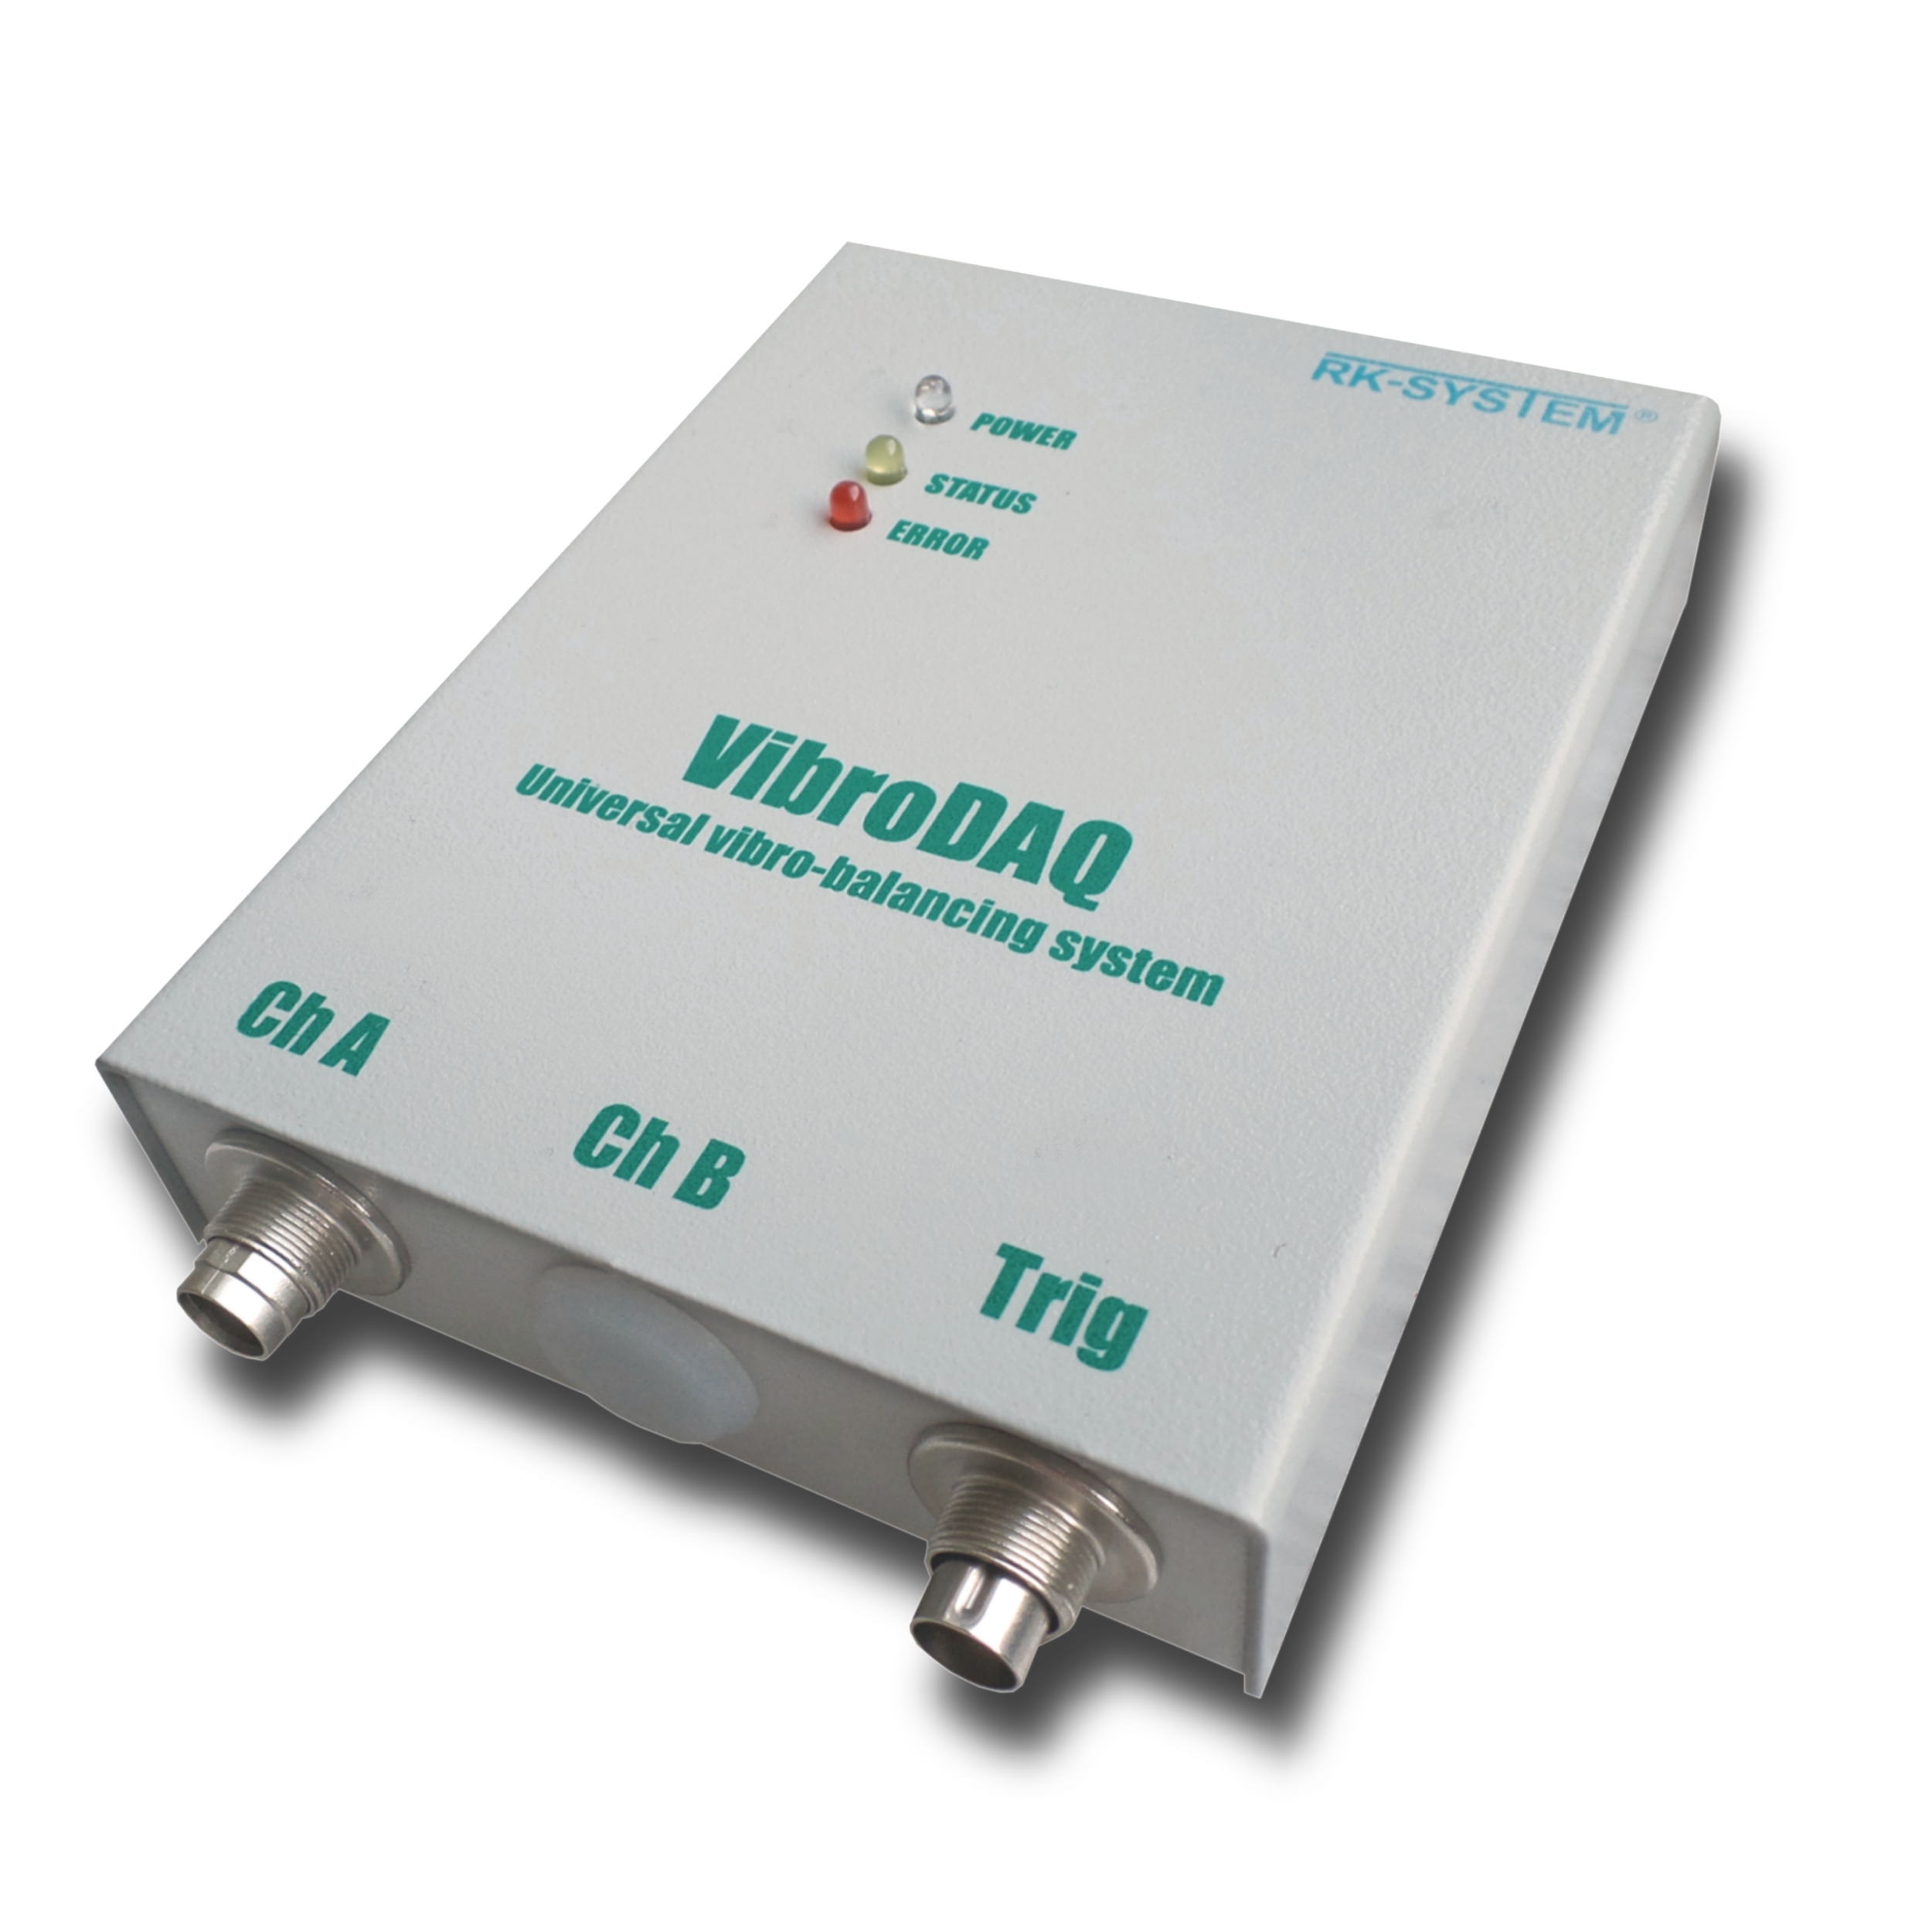 VibroDAQ professional measurement system for balancing and vibration measurements